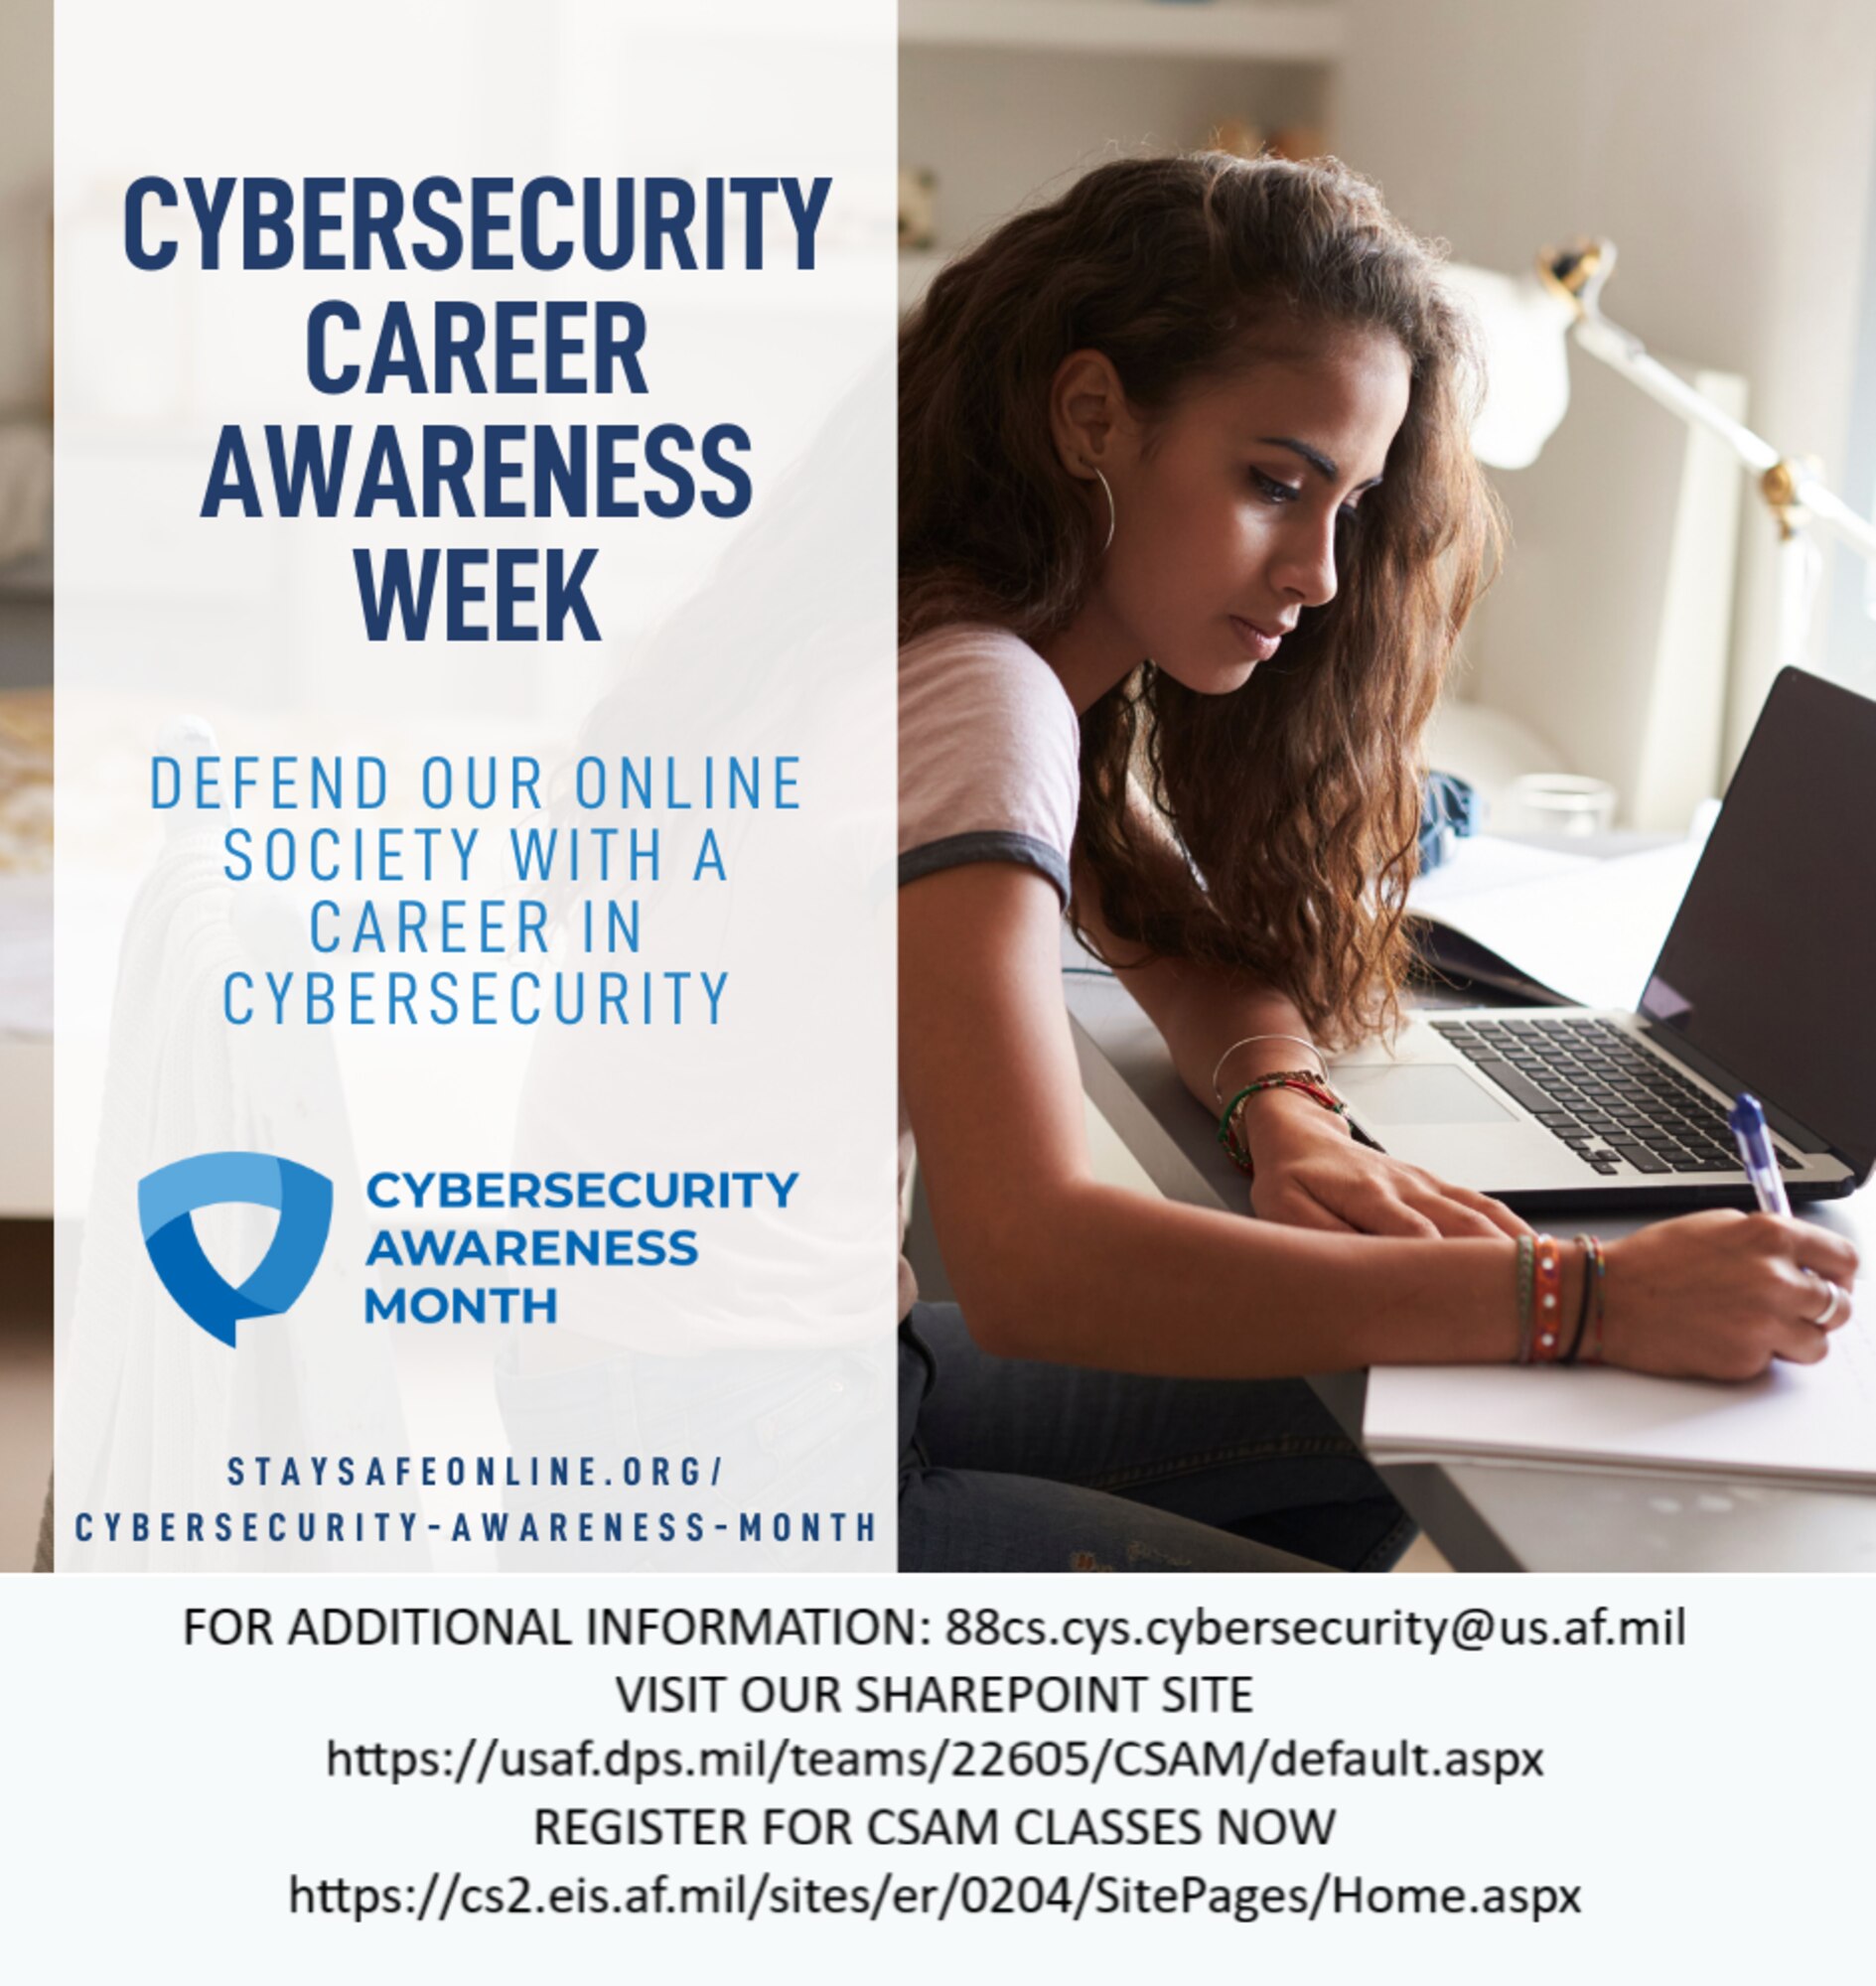 Cybersecurity Awareness Week